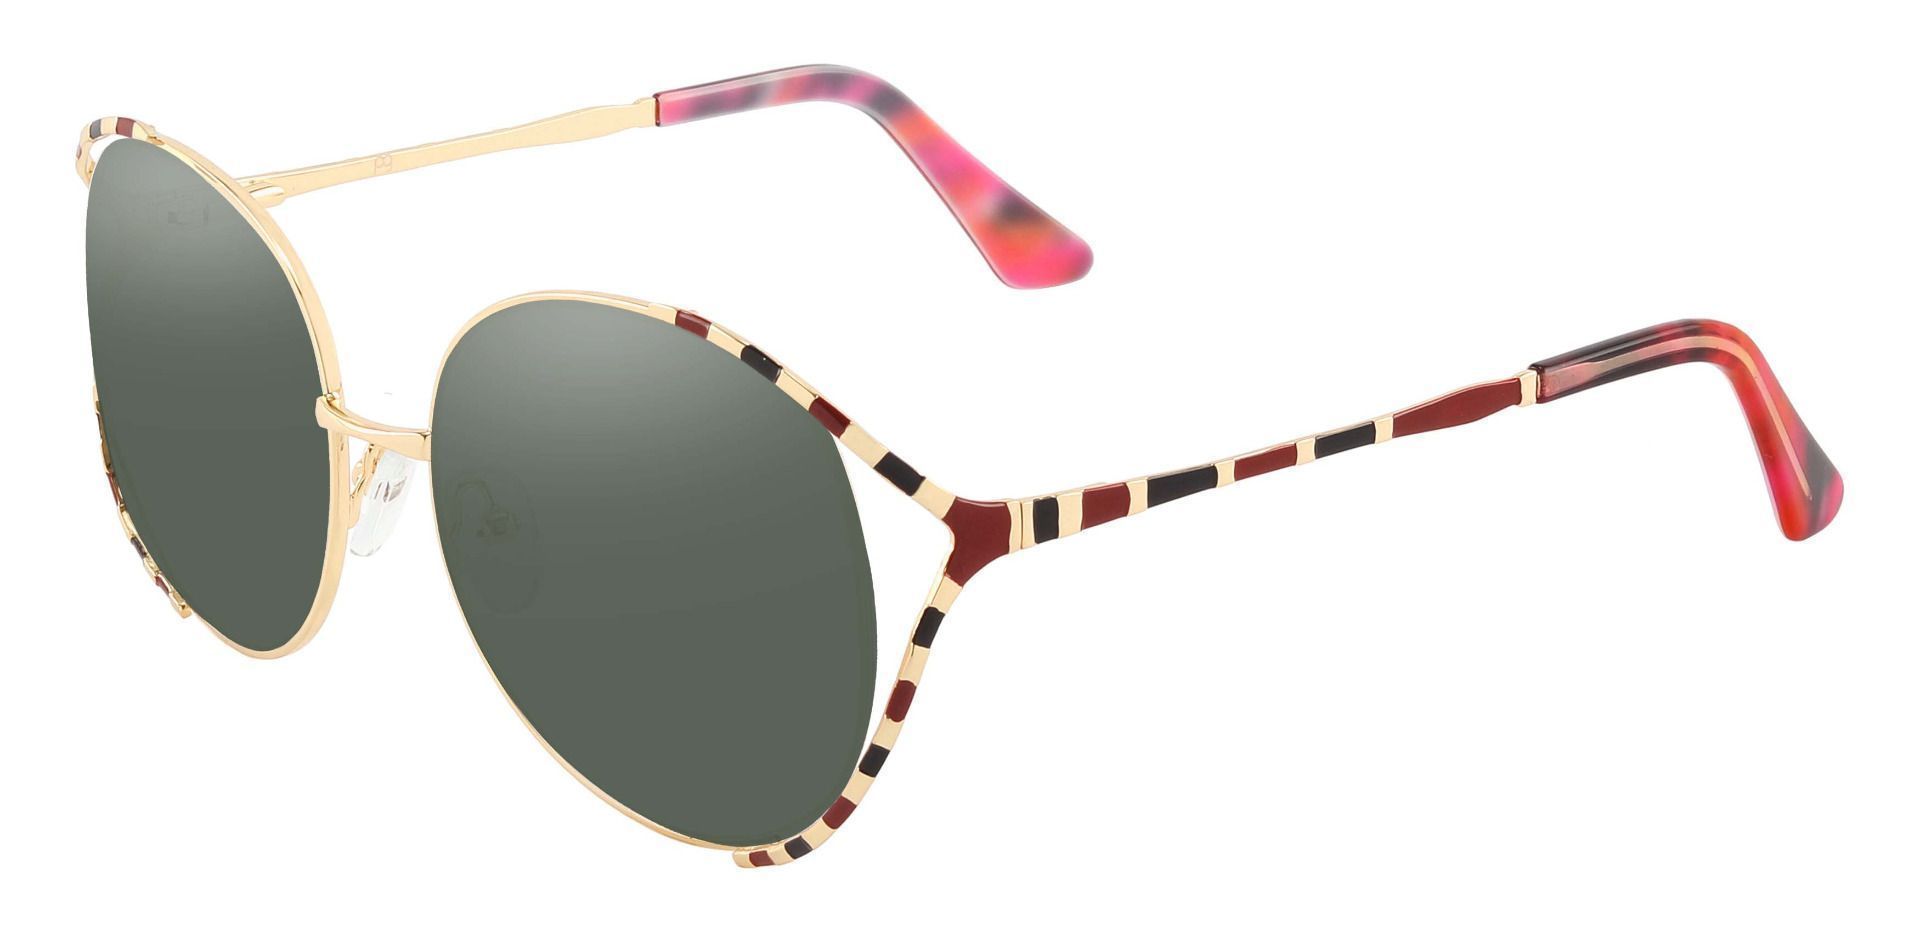 Dorothy Oval Progressive Sunglasses - Pink Frame With Green Lenses